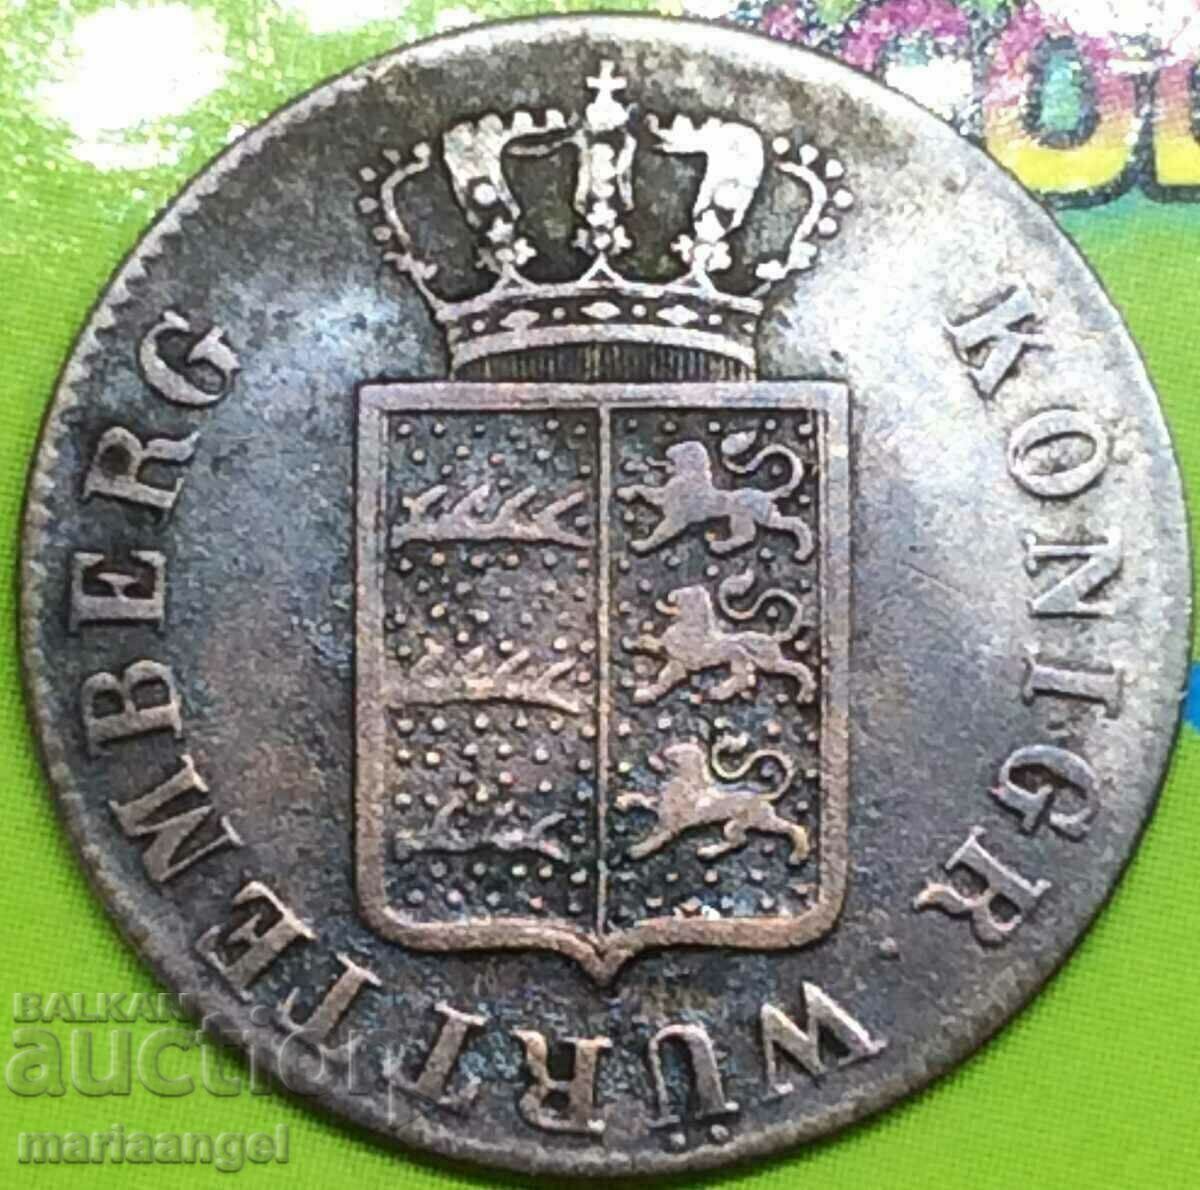 6 Kreuzer 1842 Württemberg Germania argint - rar și scump